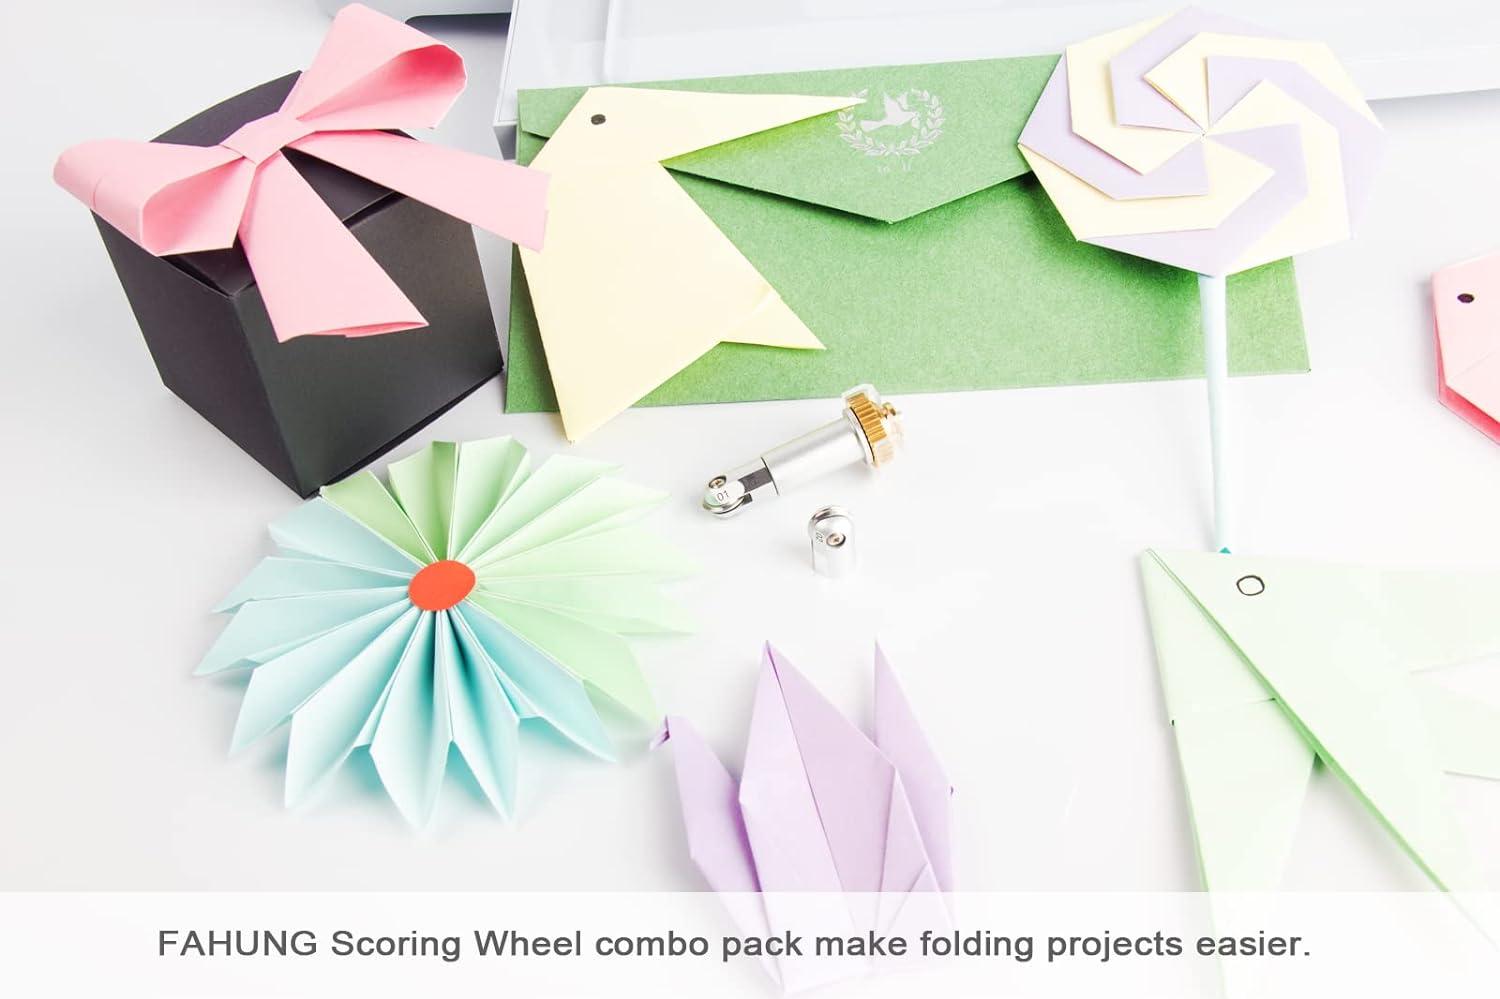  Single Scoring Wheel Tip for Maker 3/Maker Scoring Wheel,  FAHUNG 01# Single Scoring Wheel Scoring Tool Folds Cards/Envelopes/Boxes/3D  Creations : Automotive